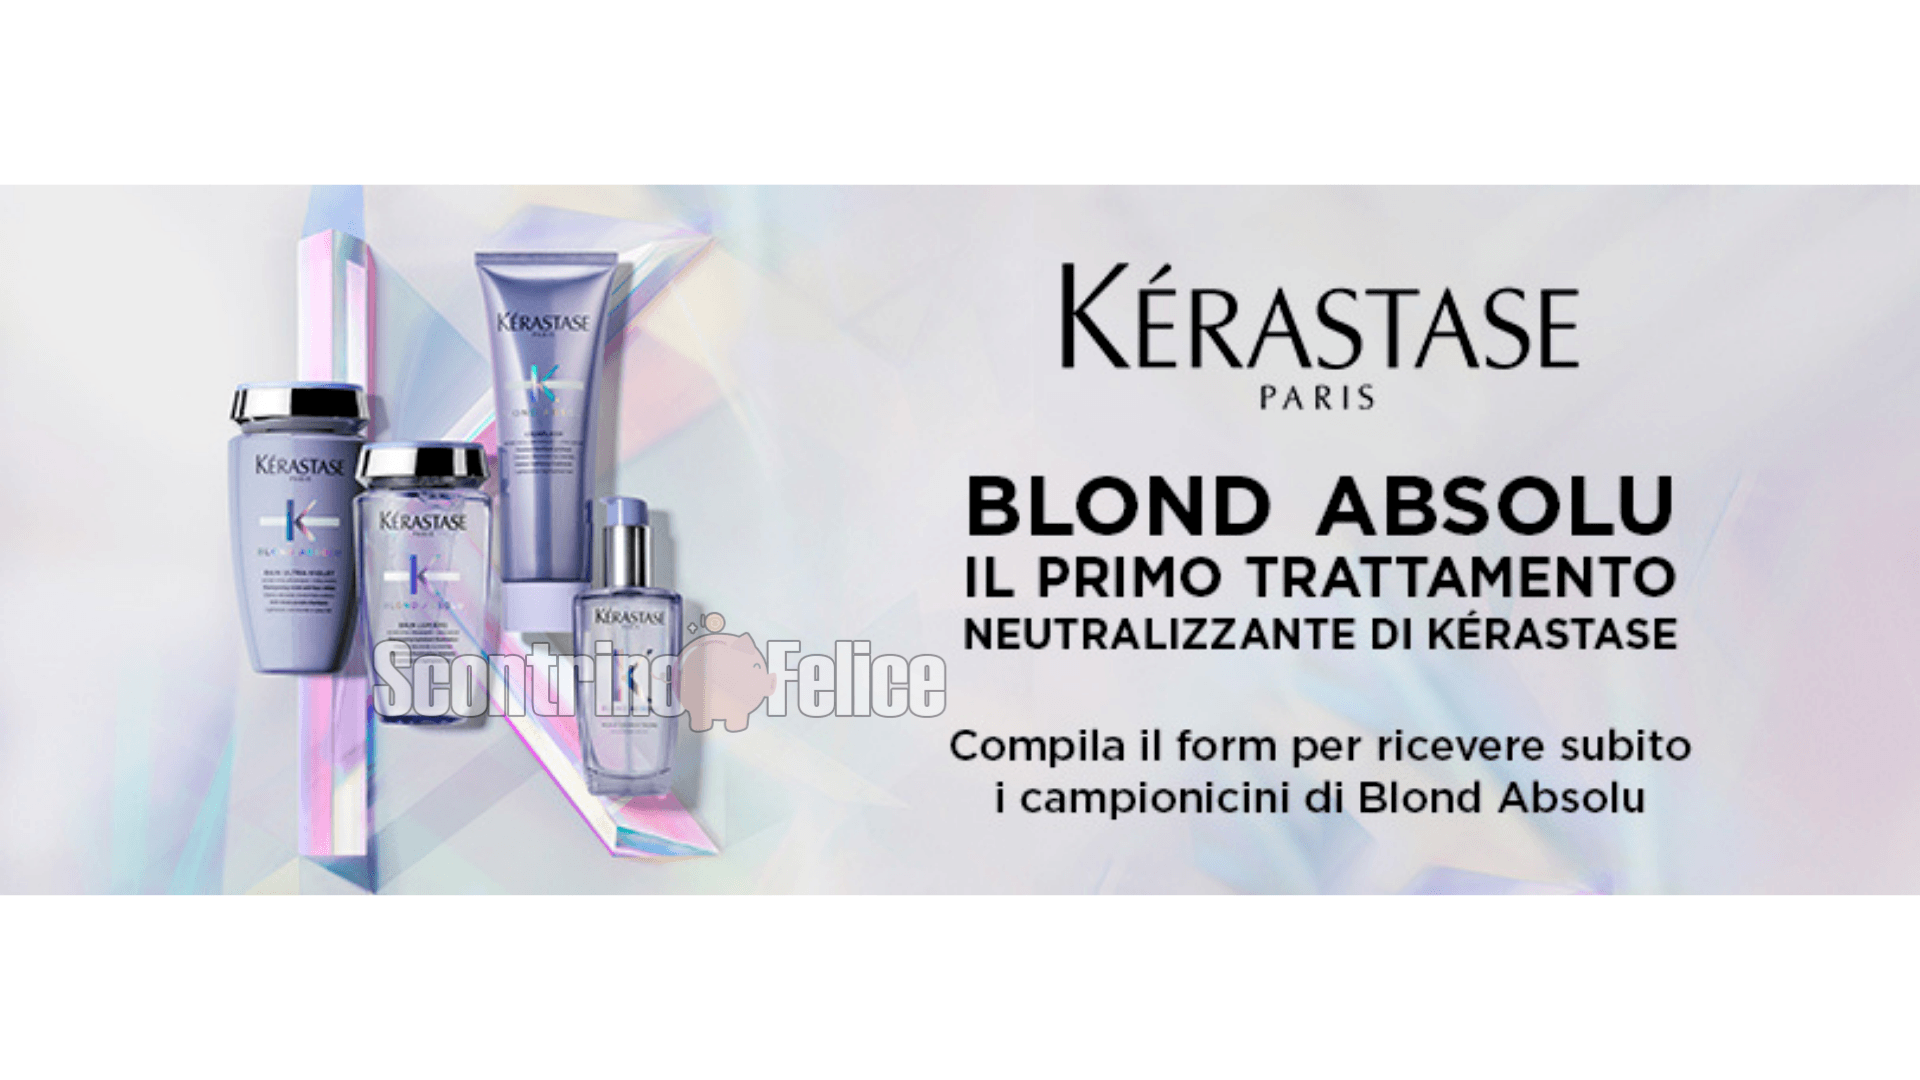 Campioni omaggio Kérastase Blond Absolu da richiedere subito! 1